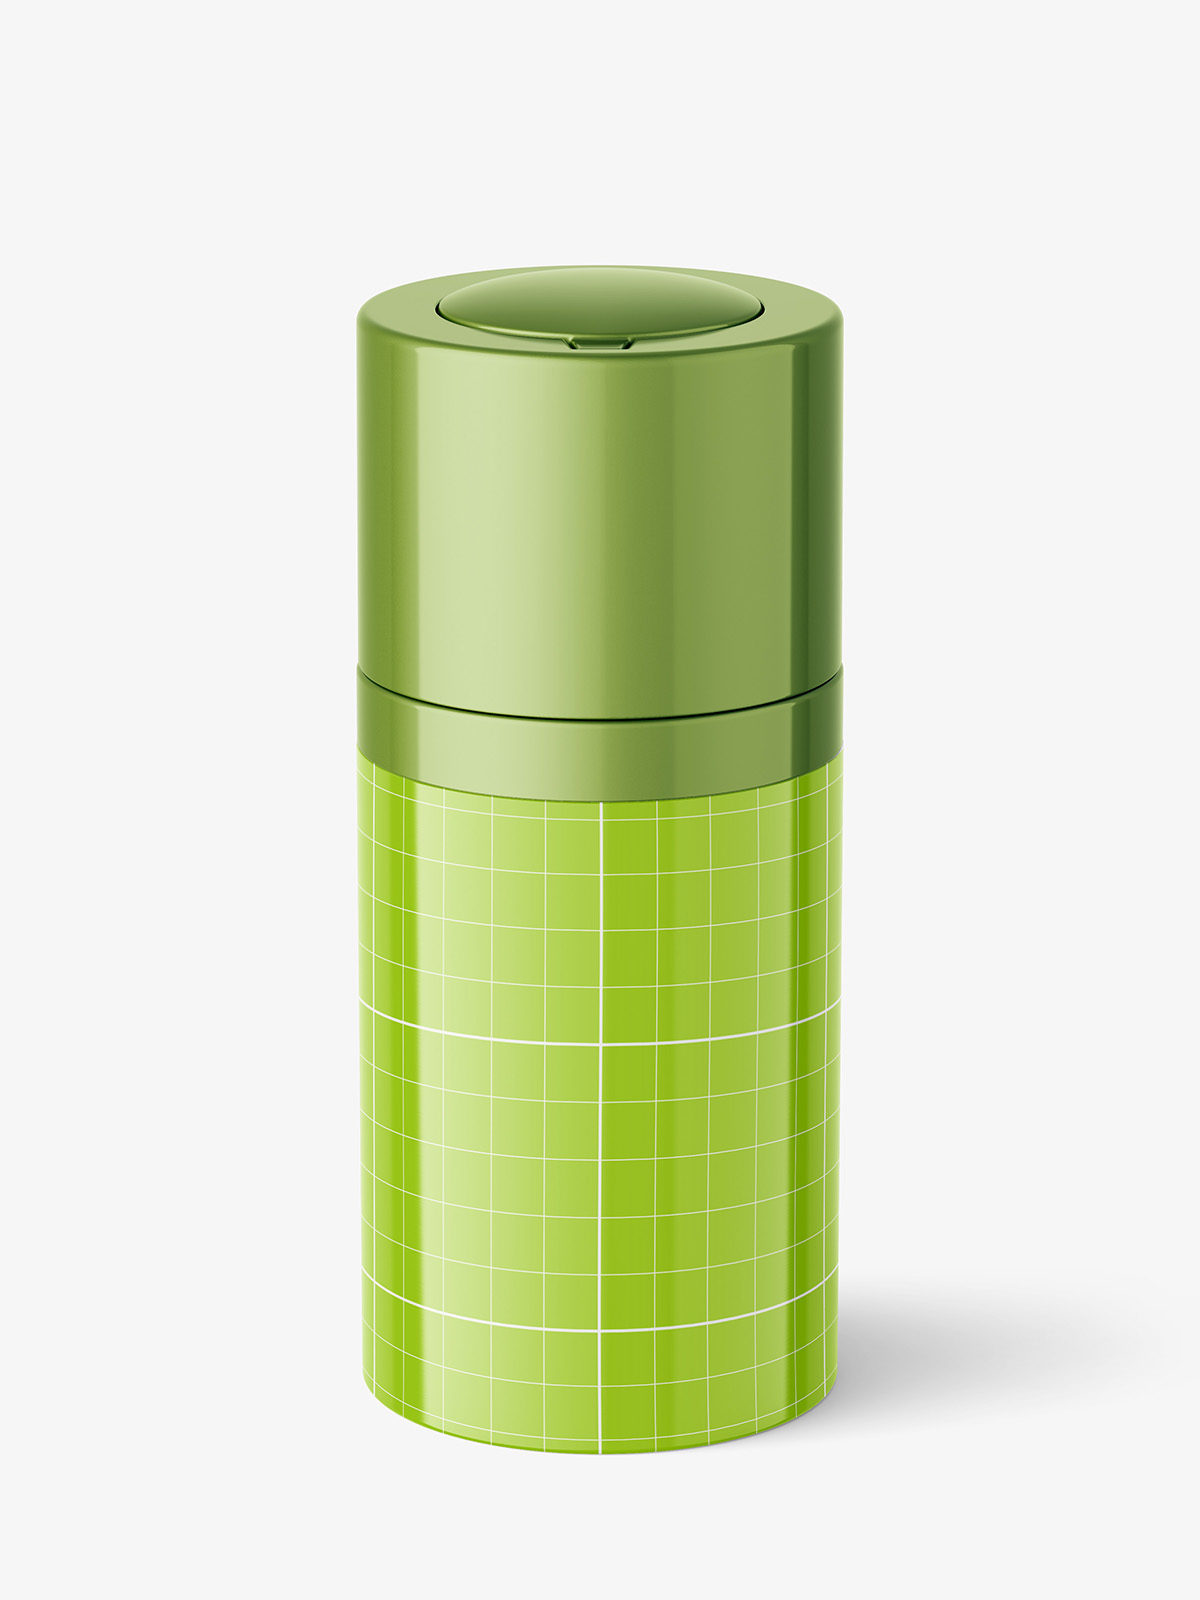 Download Airless pump bottle mockup - Smarty Mockups